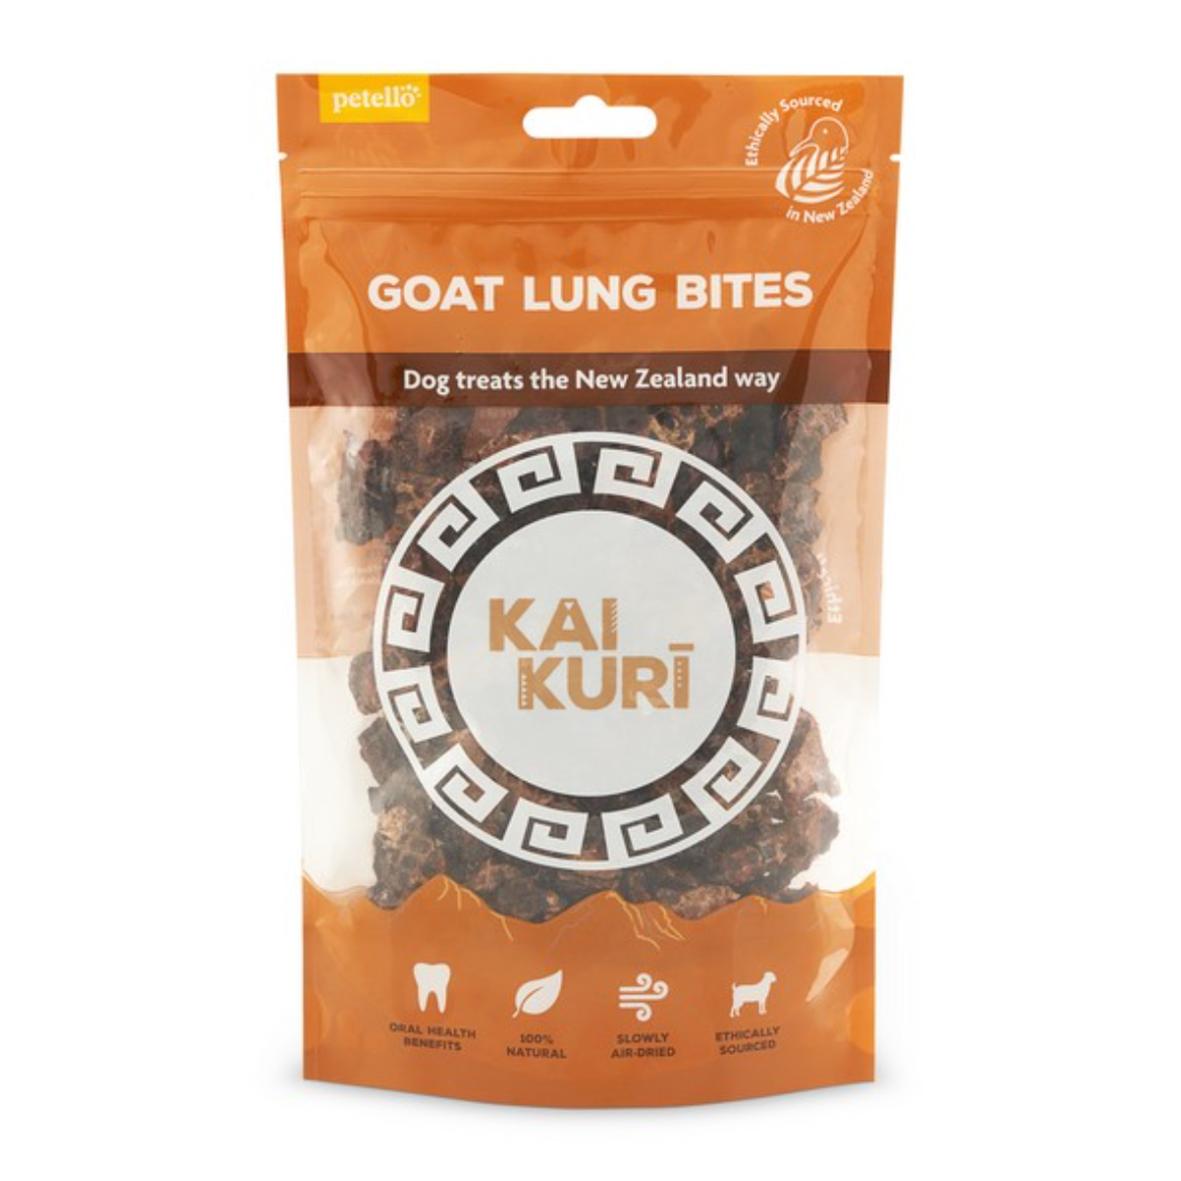 Kai Kuri Goat Lung Bites